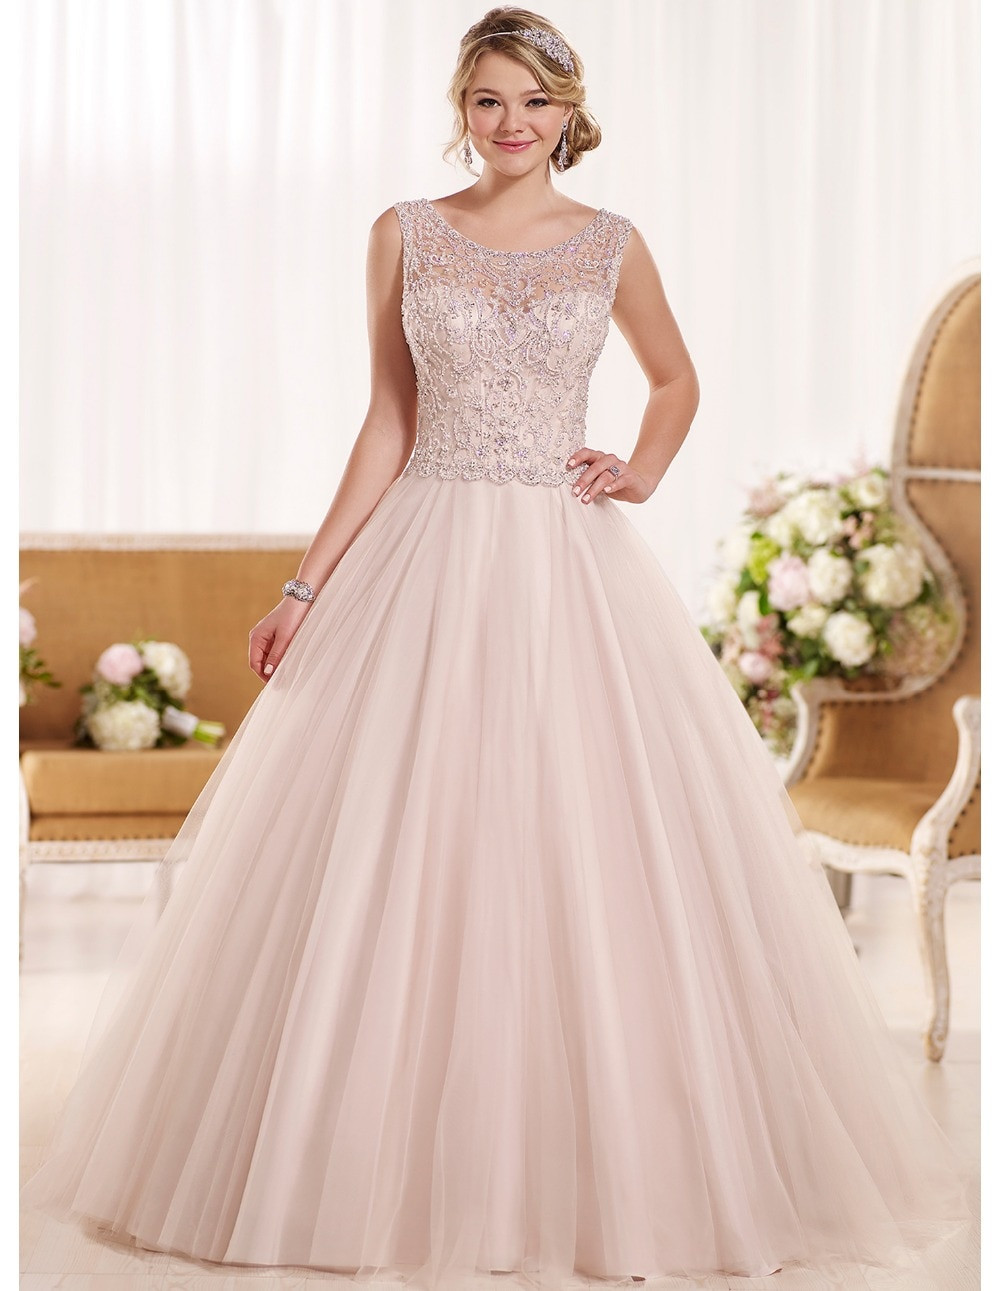 Blush Pink Wedding Dresses
 Cheap backless china blush pink wedding dresses plus